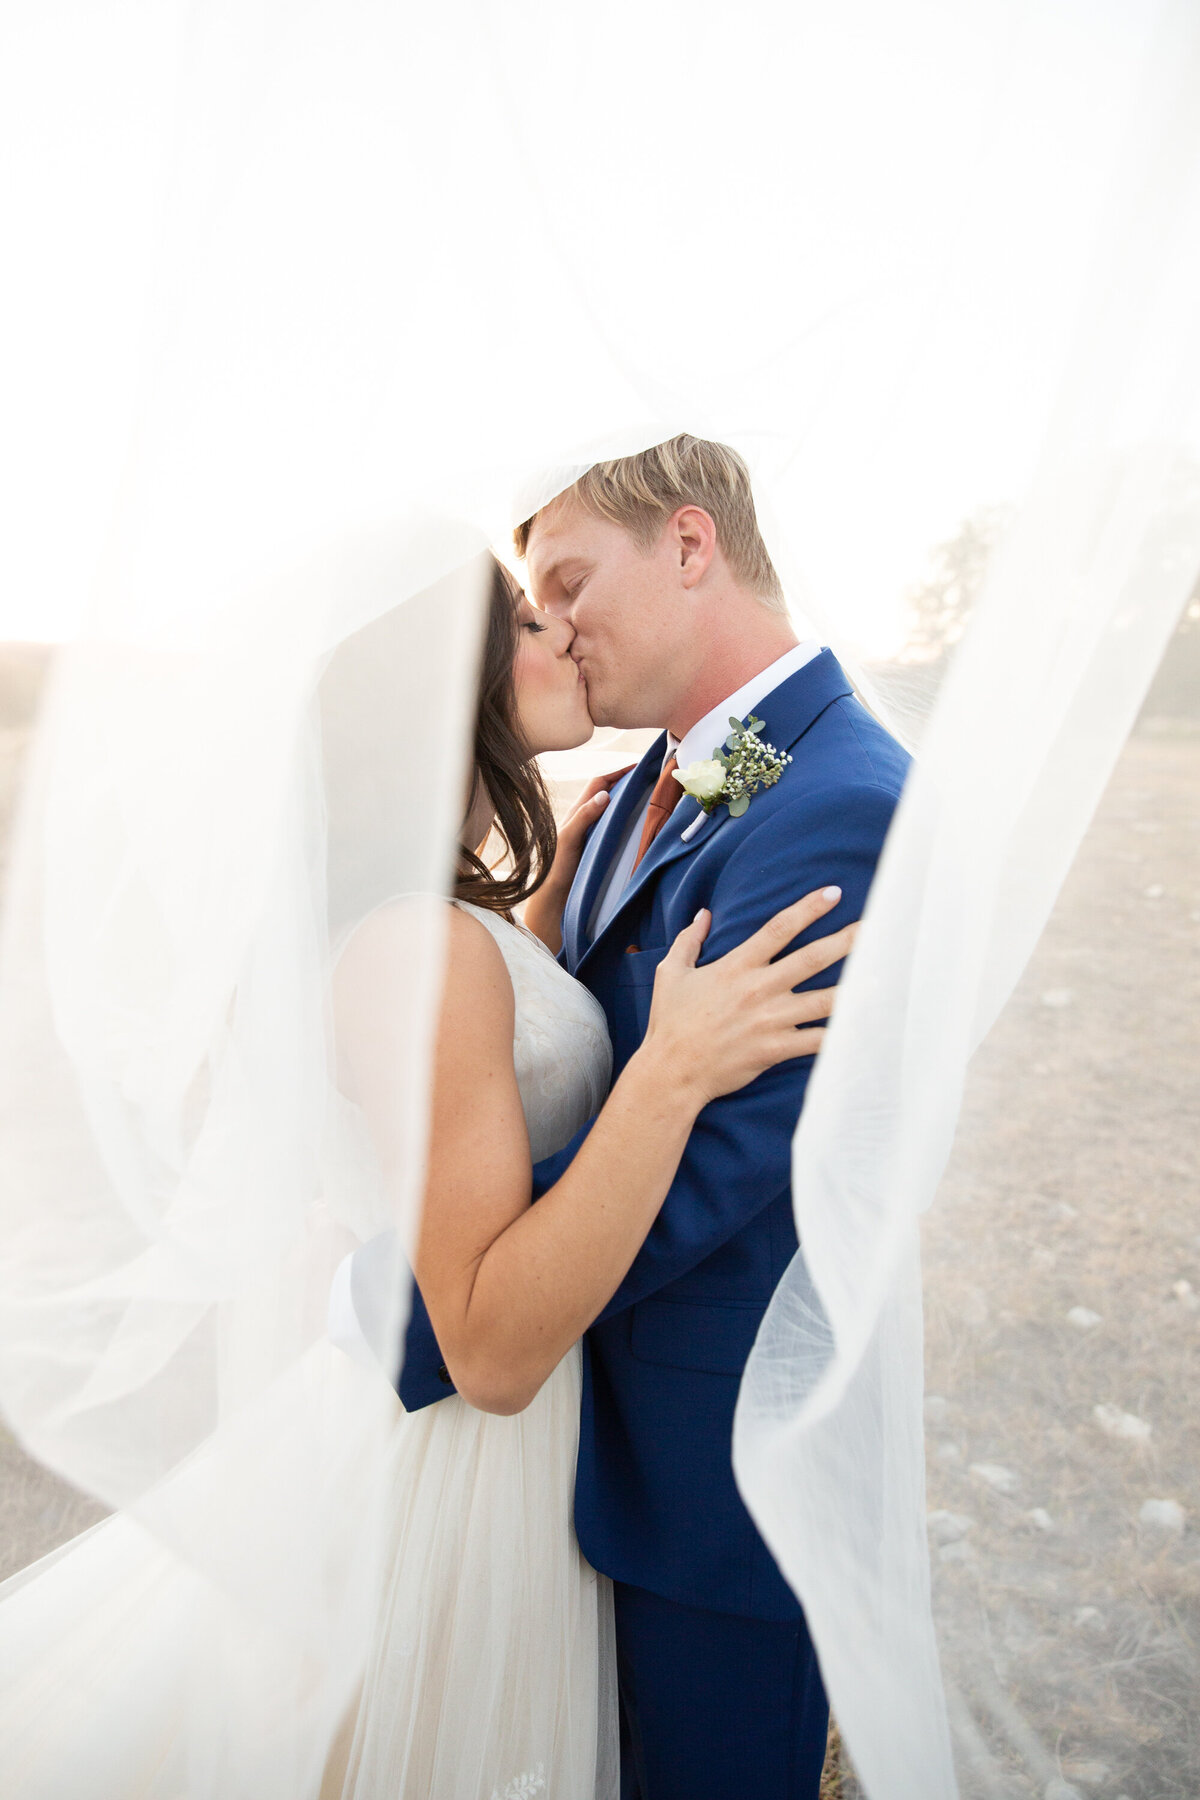 An enchanting moment captured by an Austin wedding photographer as the bride and groom share a tender kiss beneath their veil.